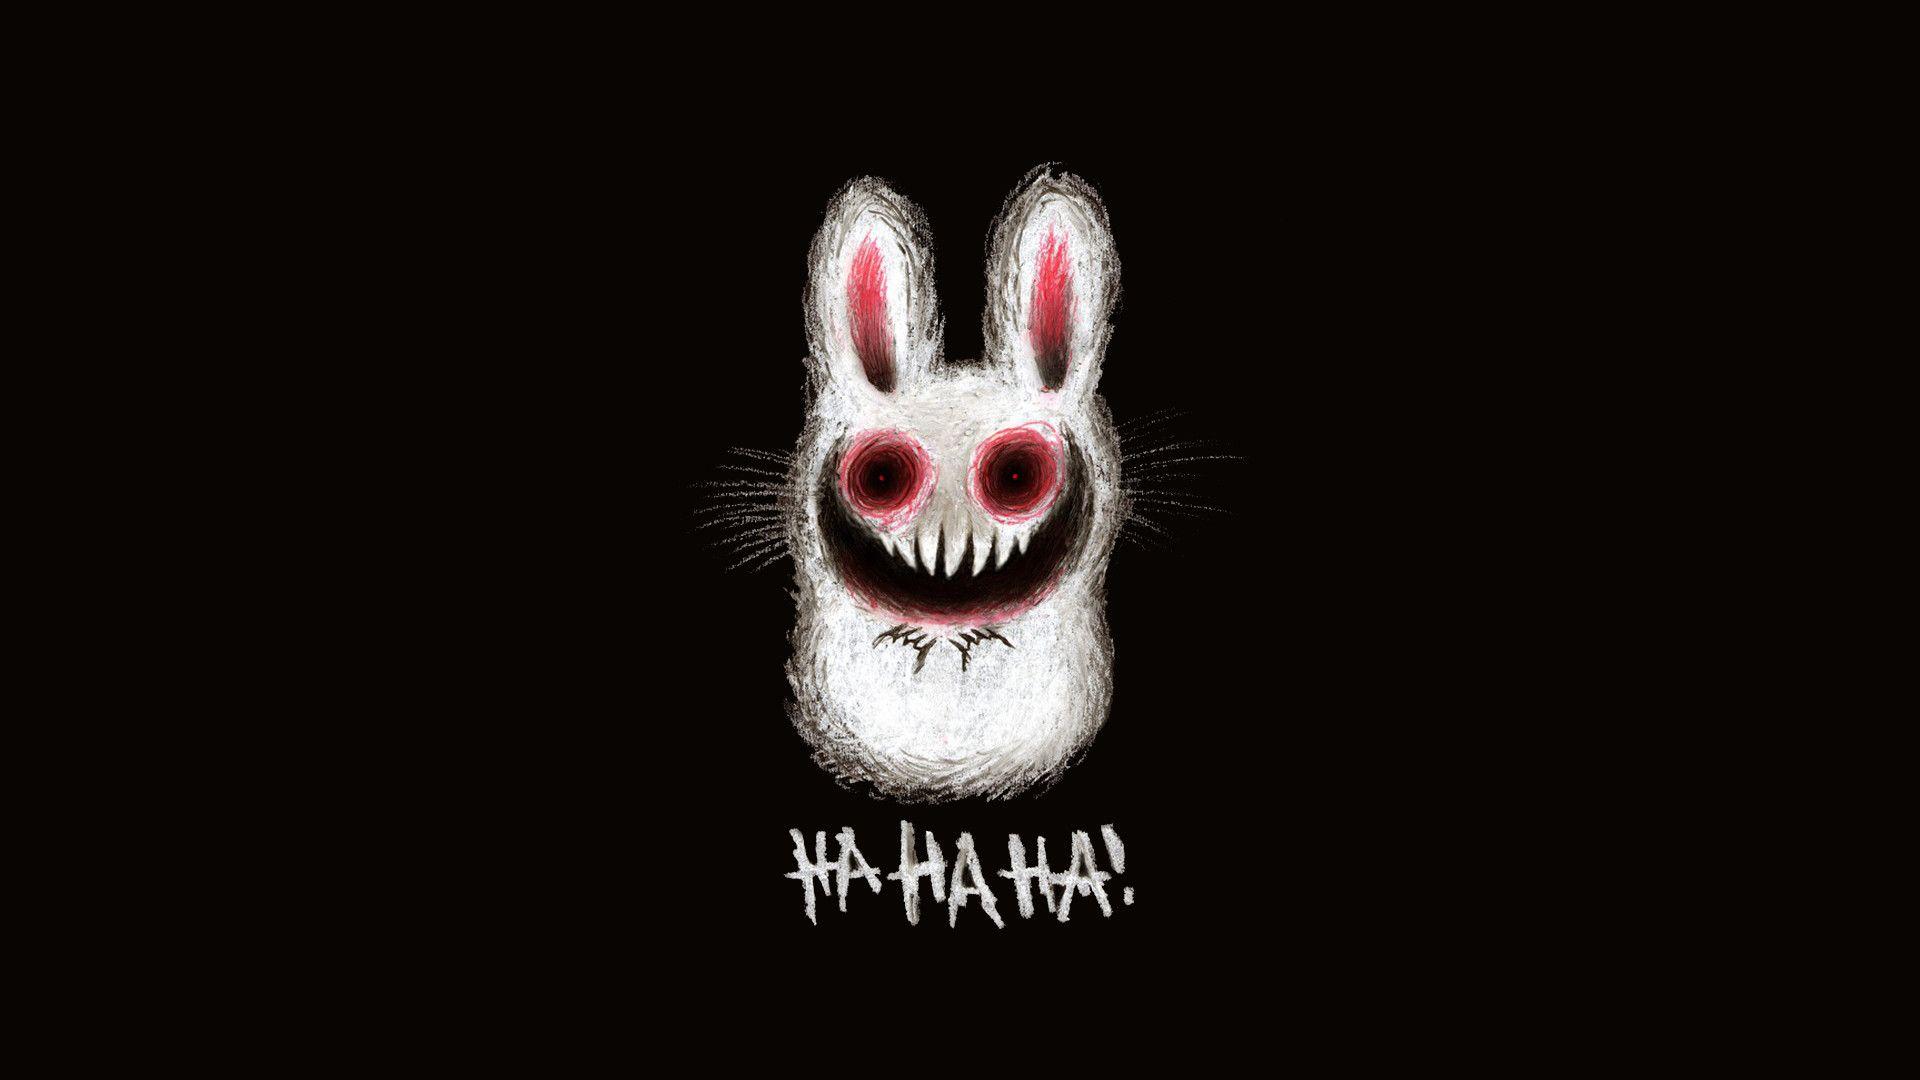 Creepy bunny wallpaper, cute adorable fluffy scary